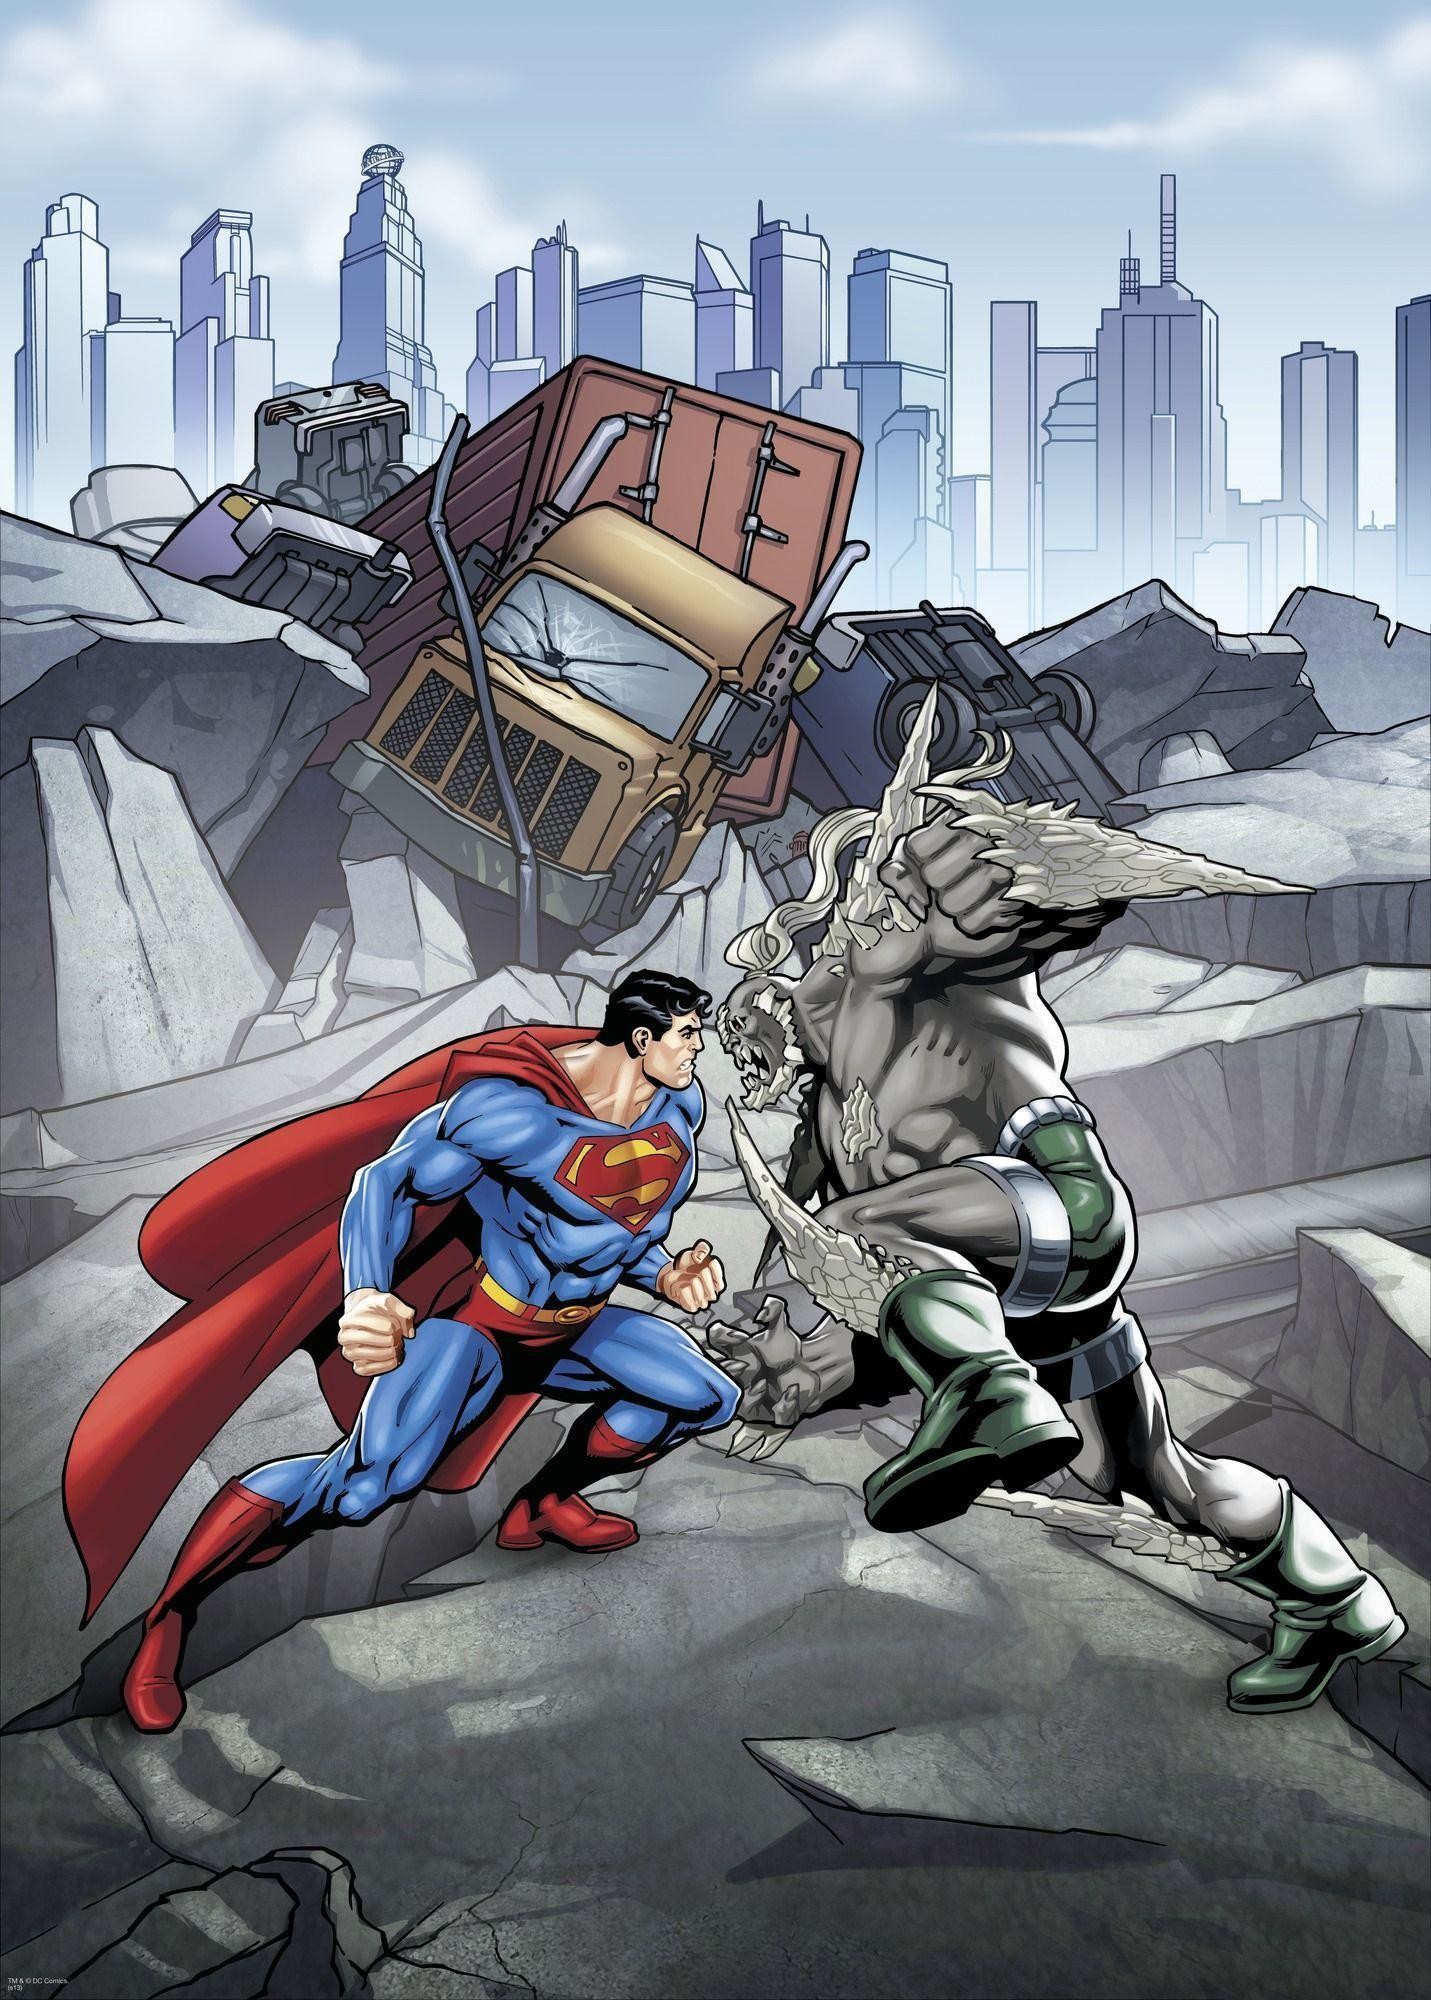 doomsday wallpaper,fictional character,superhero,hero,batman,justice league